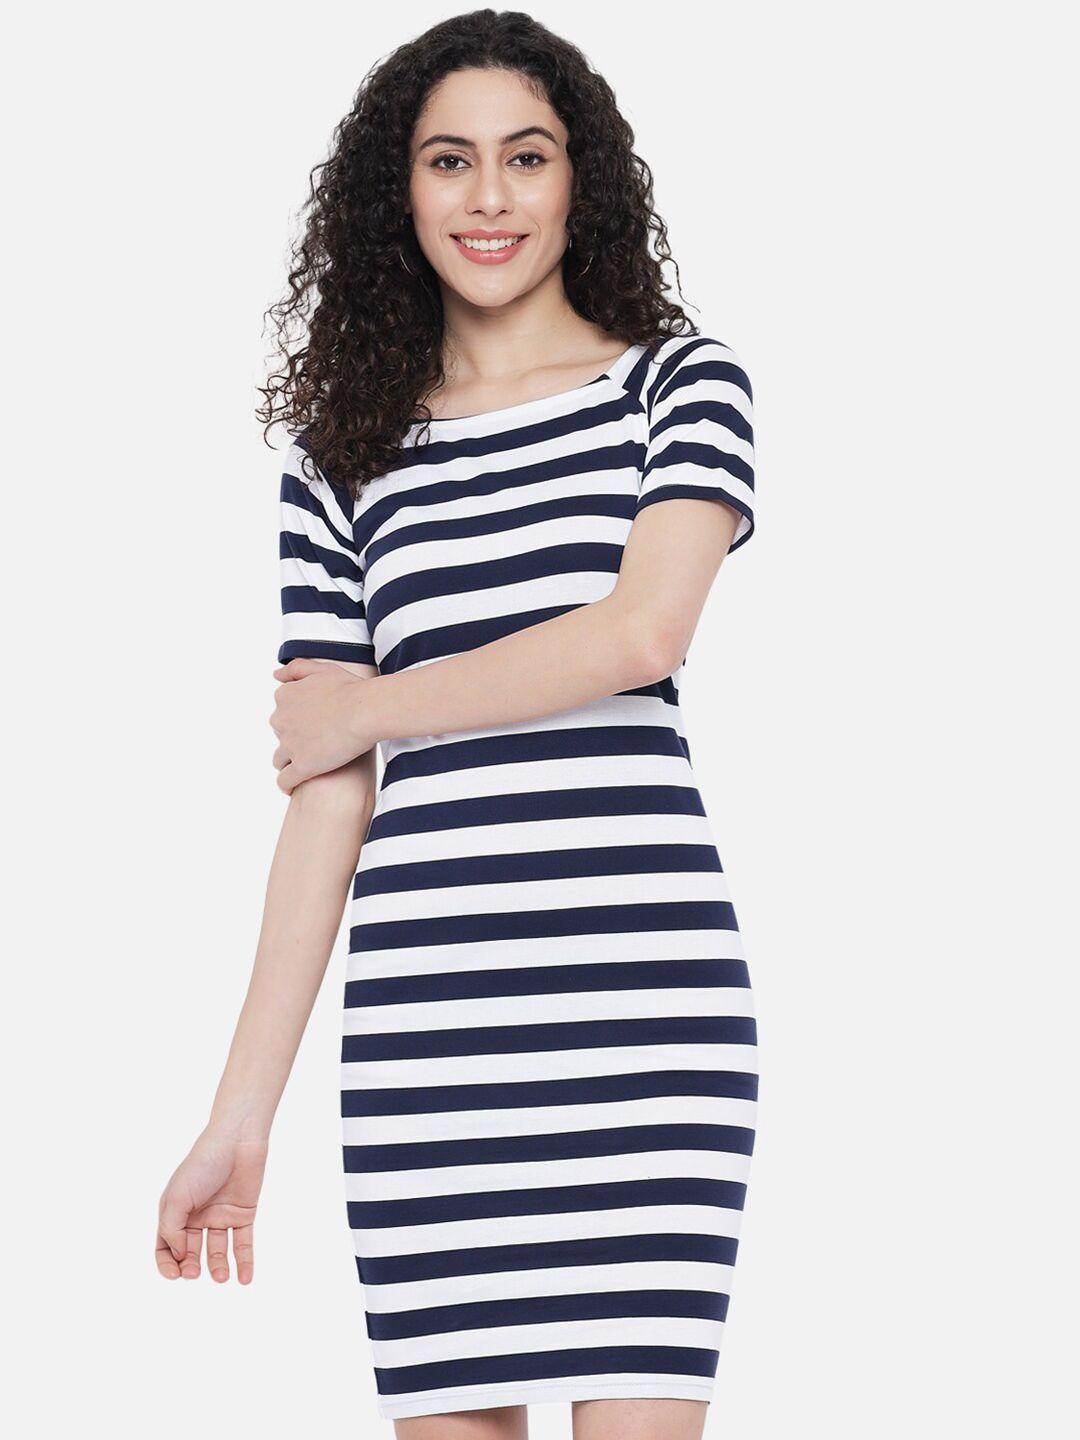 trend arrest white & navy blue striped cotton sheath dress